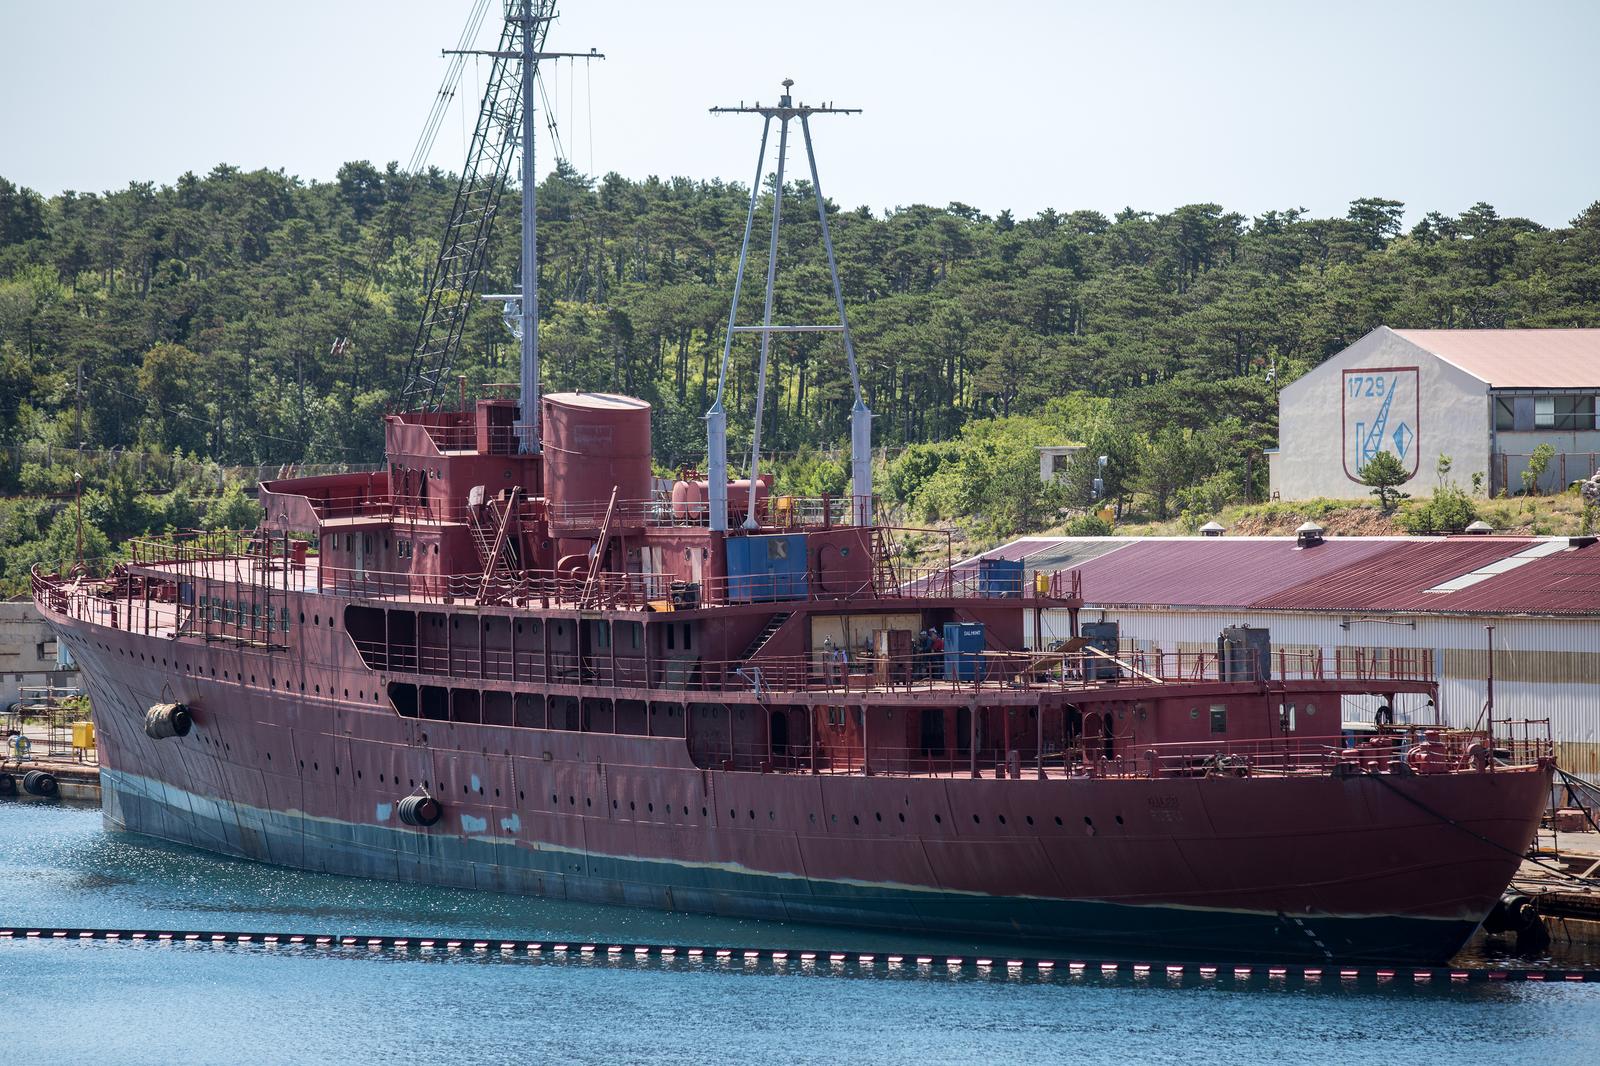 09.08.2021., Kraljevica -Brod Galeb na remontu u brodogradilistu Kraljevica.  Photo: Nel Pavletic/PIXSELL